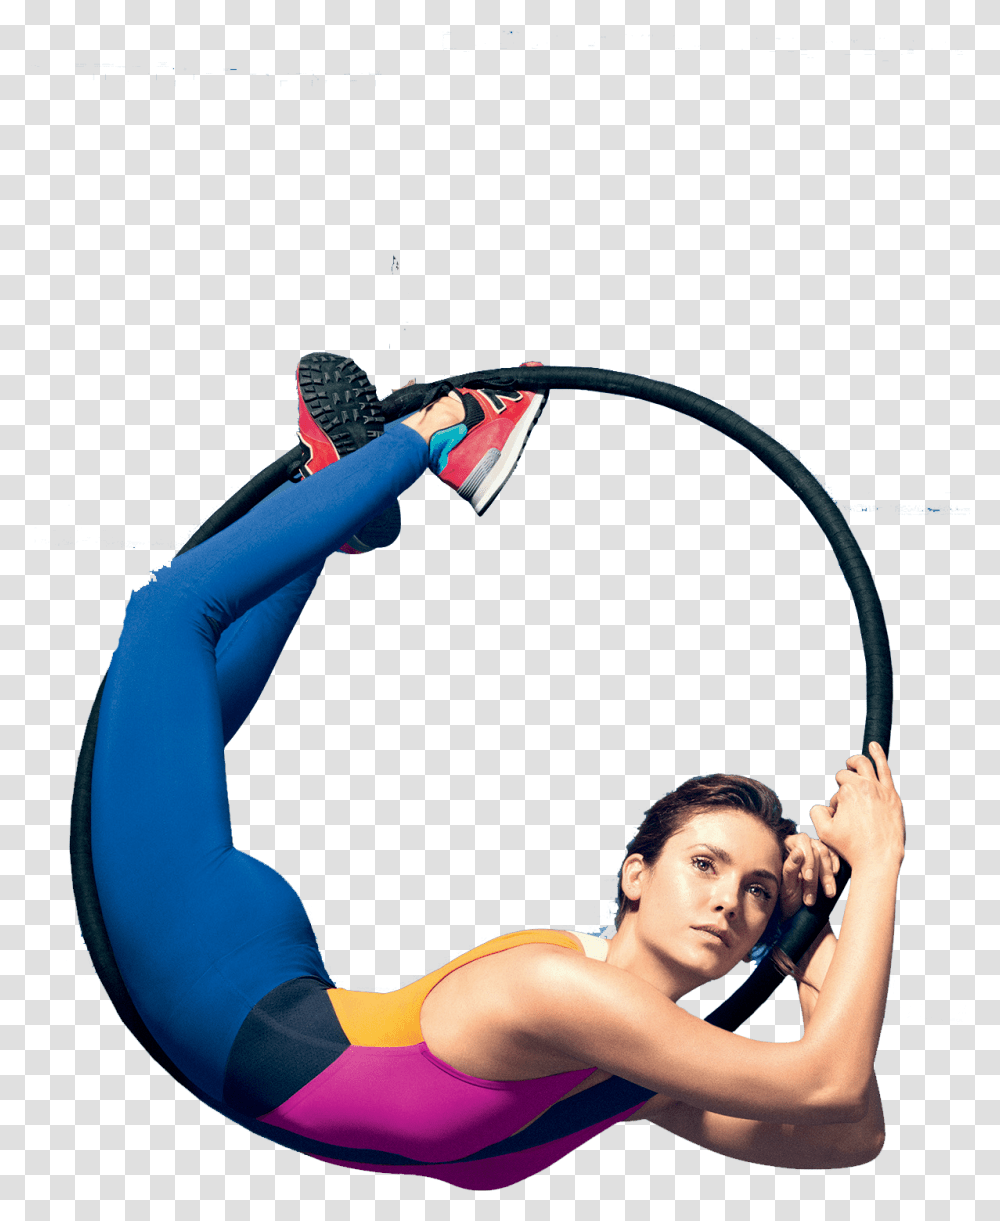 I Have A Cutout Ribbon Rhythmic Gymnastics Full Size Nina Dobrev A Gymnast, Person, Human, Acrobatic, Athlete Transparent Png